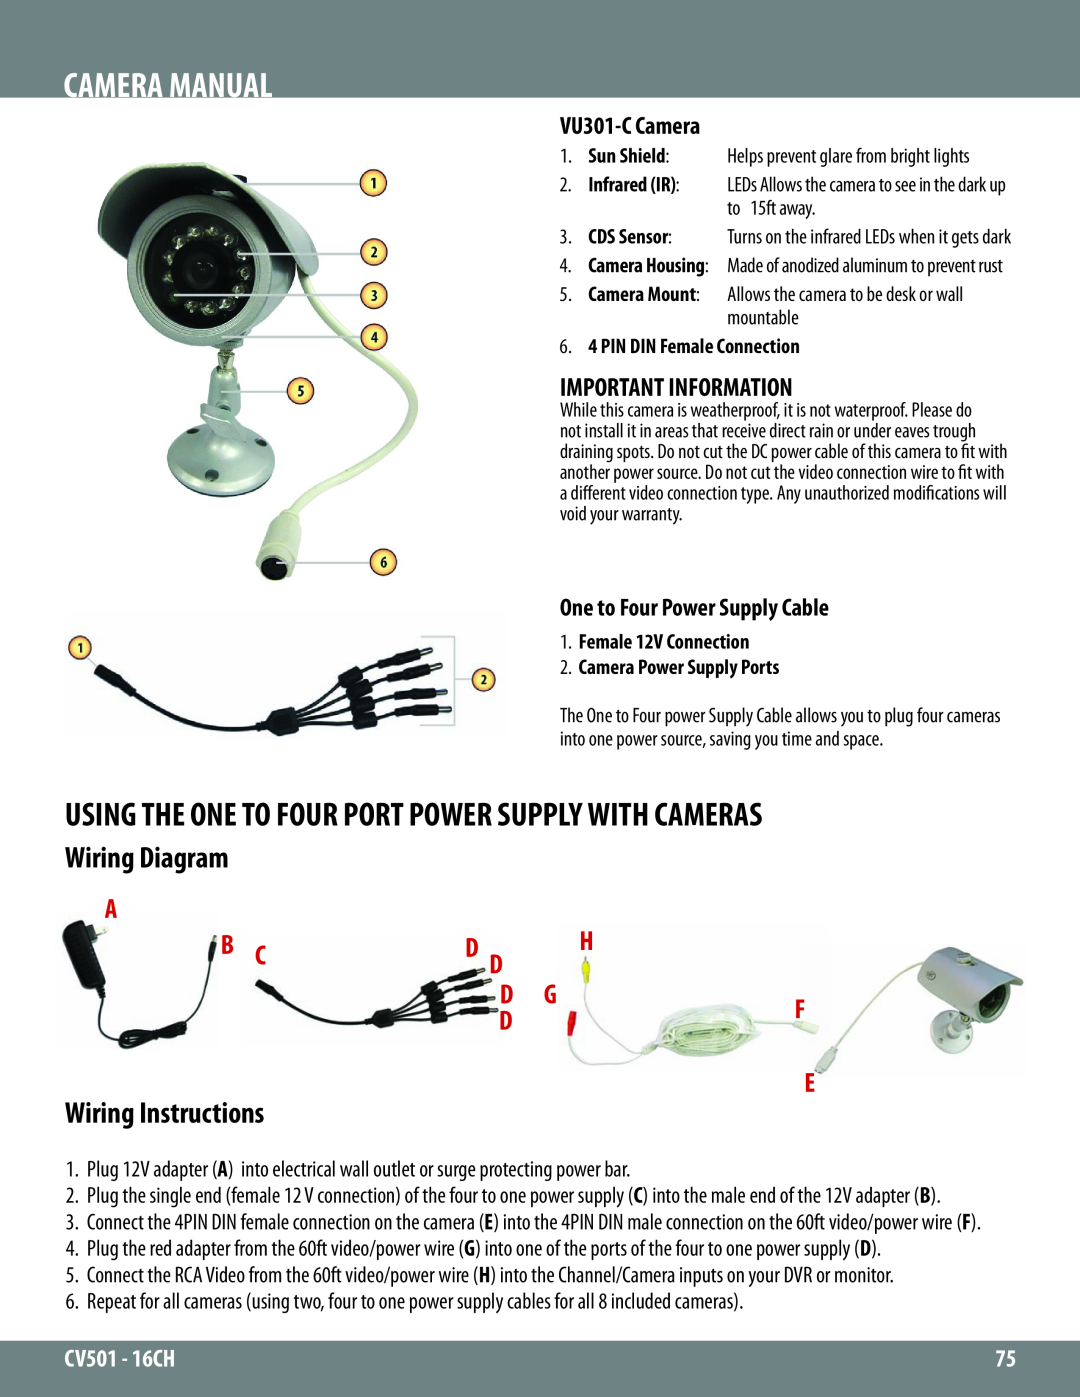 SVAT Electronics CV501 - 16CH Camera Manual, Wiring Diagram, Wiring Instructions, A B Cd D H D Gf D E, VU301-CCamera 